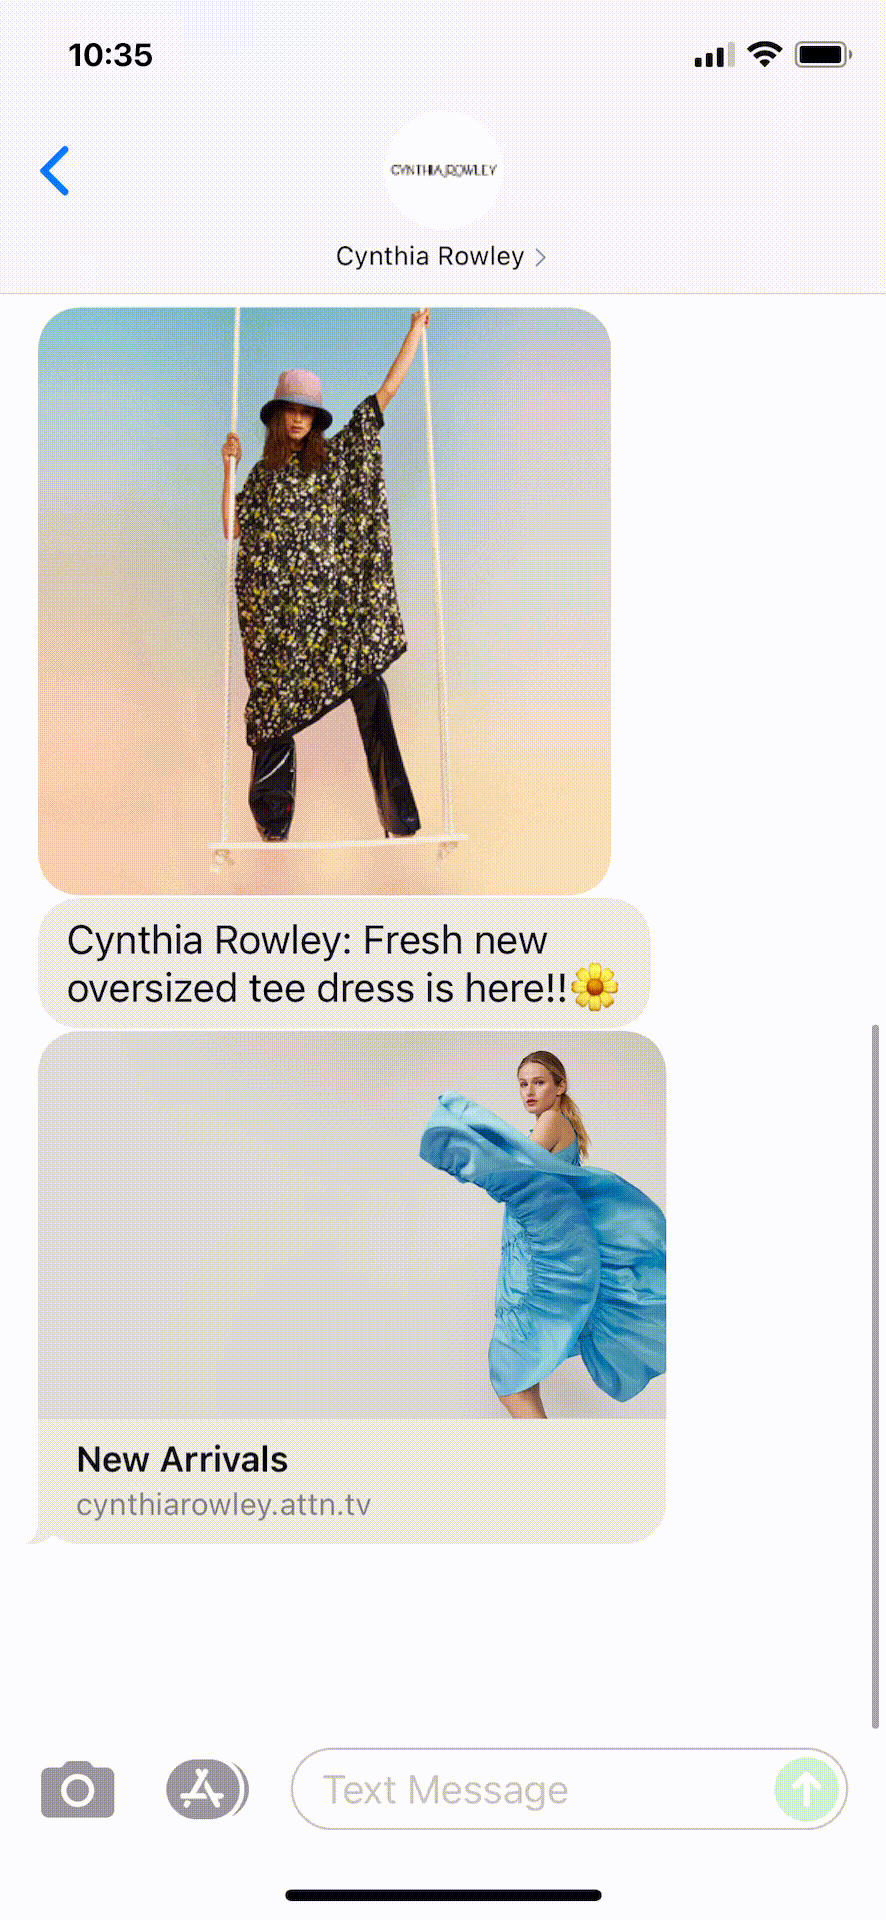 Cynthia-Rowley-Text-Message-Marketing-Example-07.17.2021